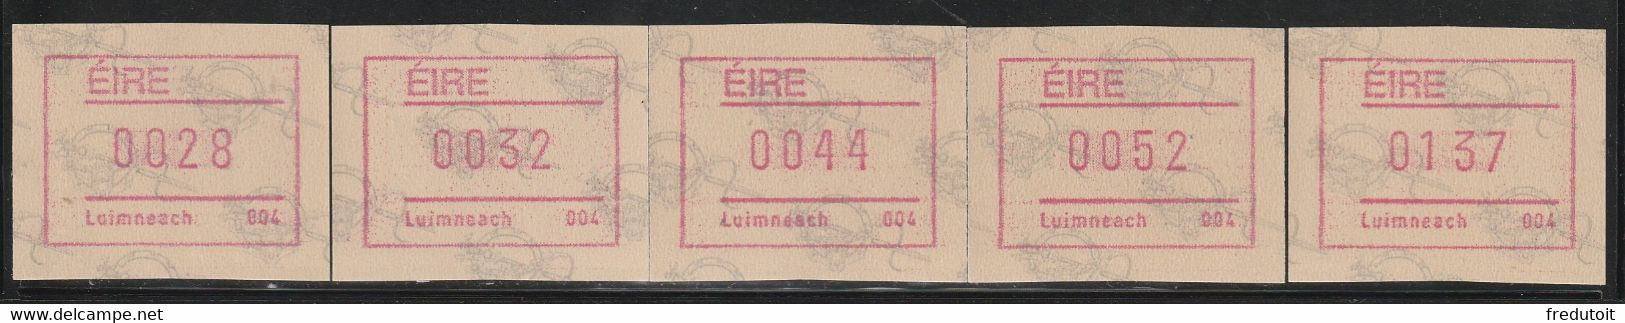 IRLANDE - Timbres Distributeurs / FRAMA  ATM - N°4** (1992) Luimneach 004 - Automatenmarken (Frama)